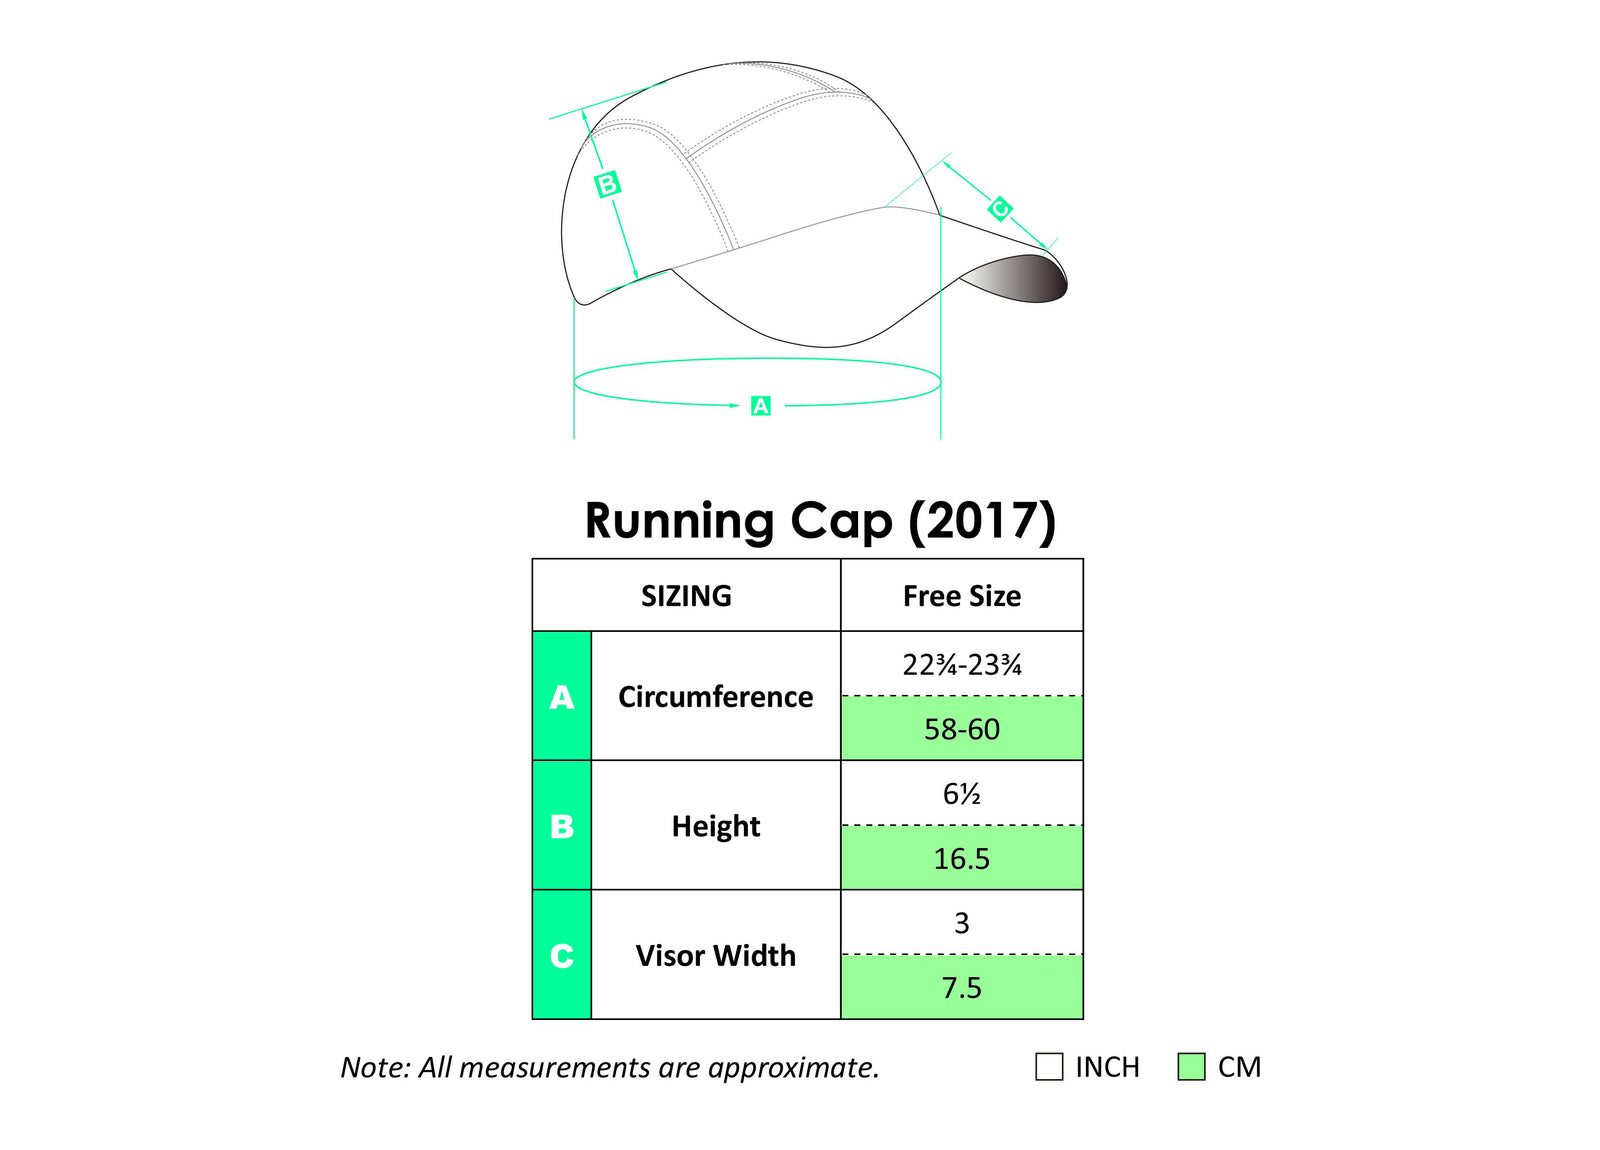 GTC CG001 Running cap (Blue)